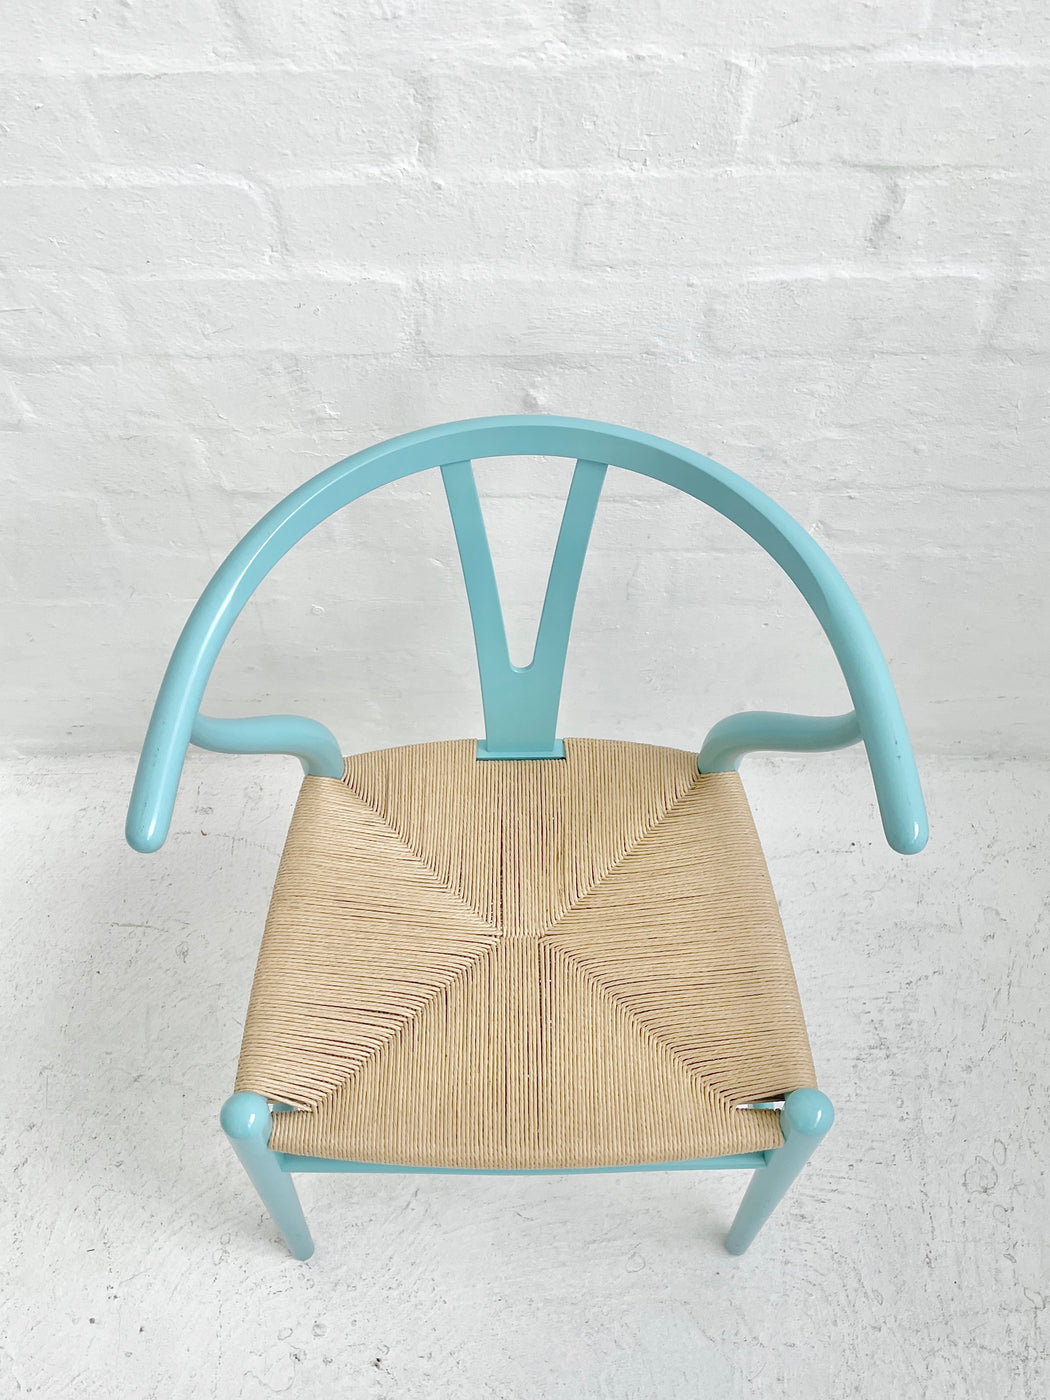 Hans J. Wegner CH24 'Wishbone' Chair